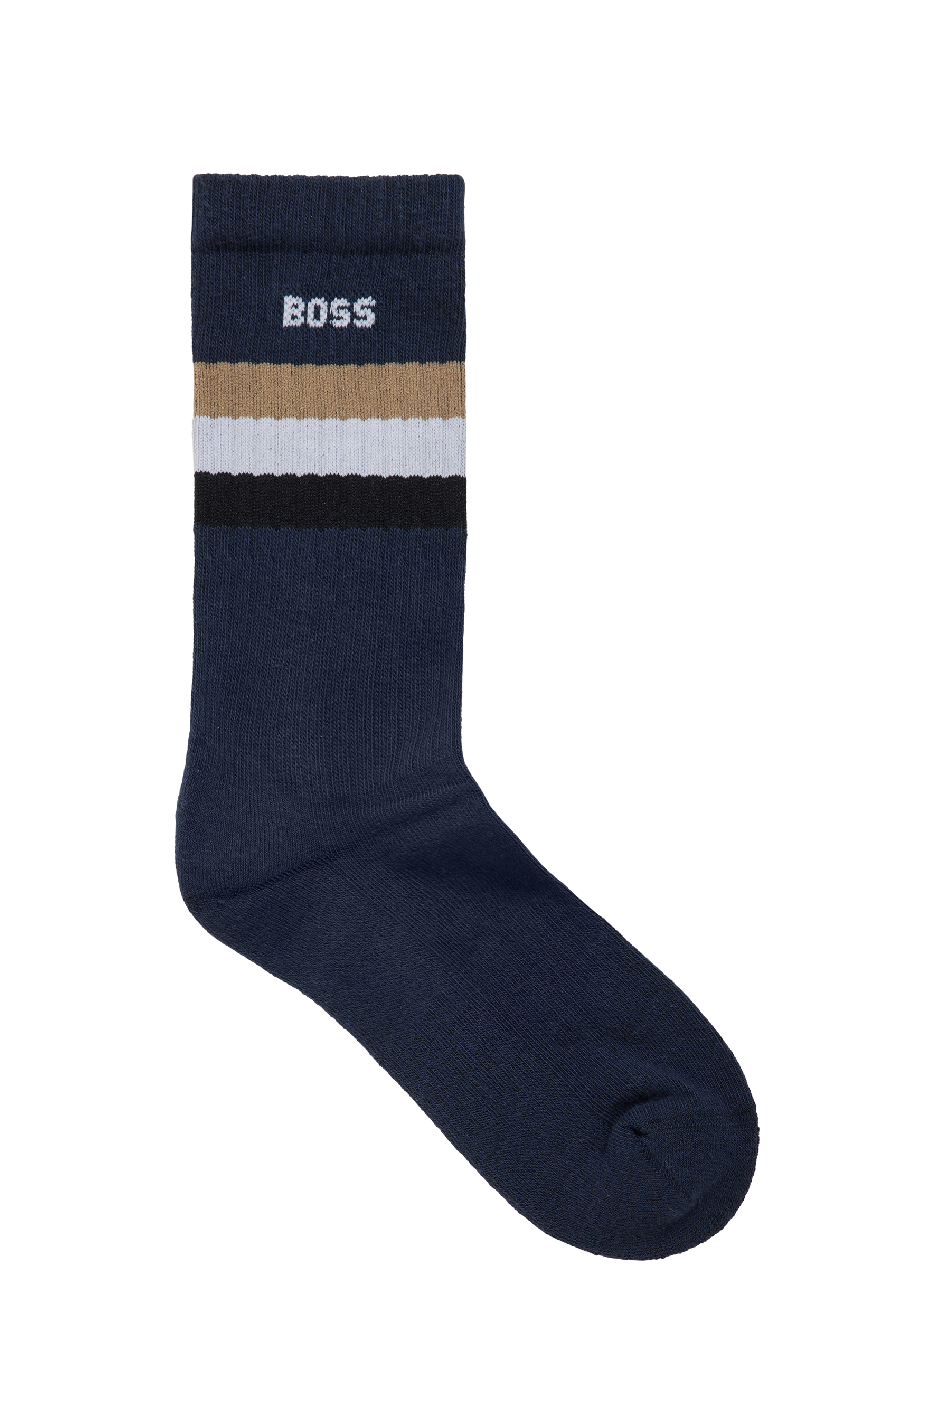 Boss Men's Ribbed Signature Stripe Sock